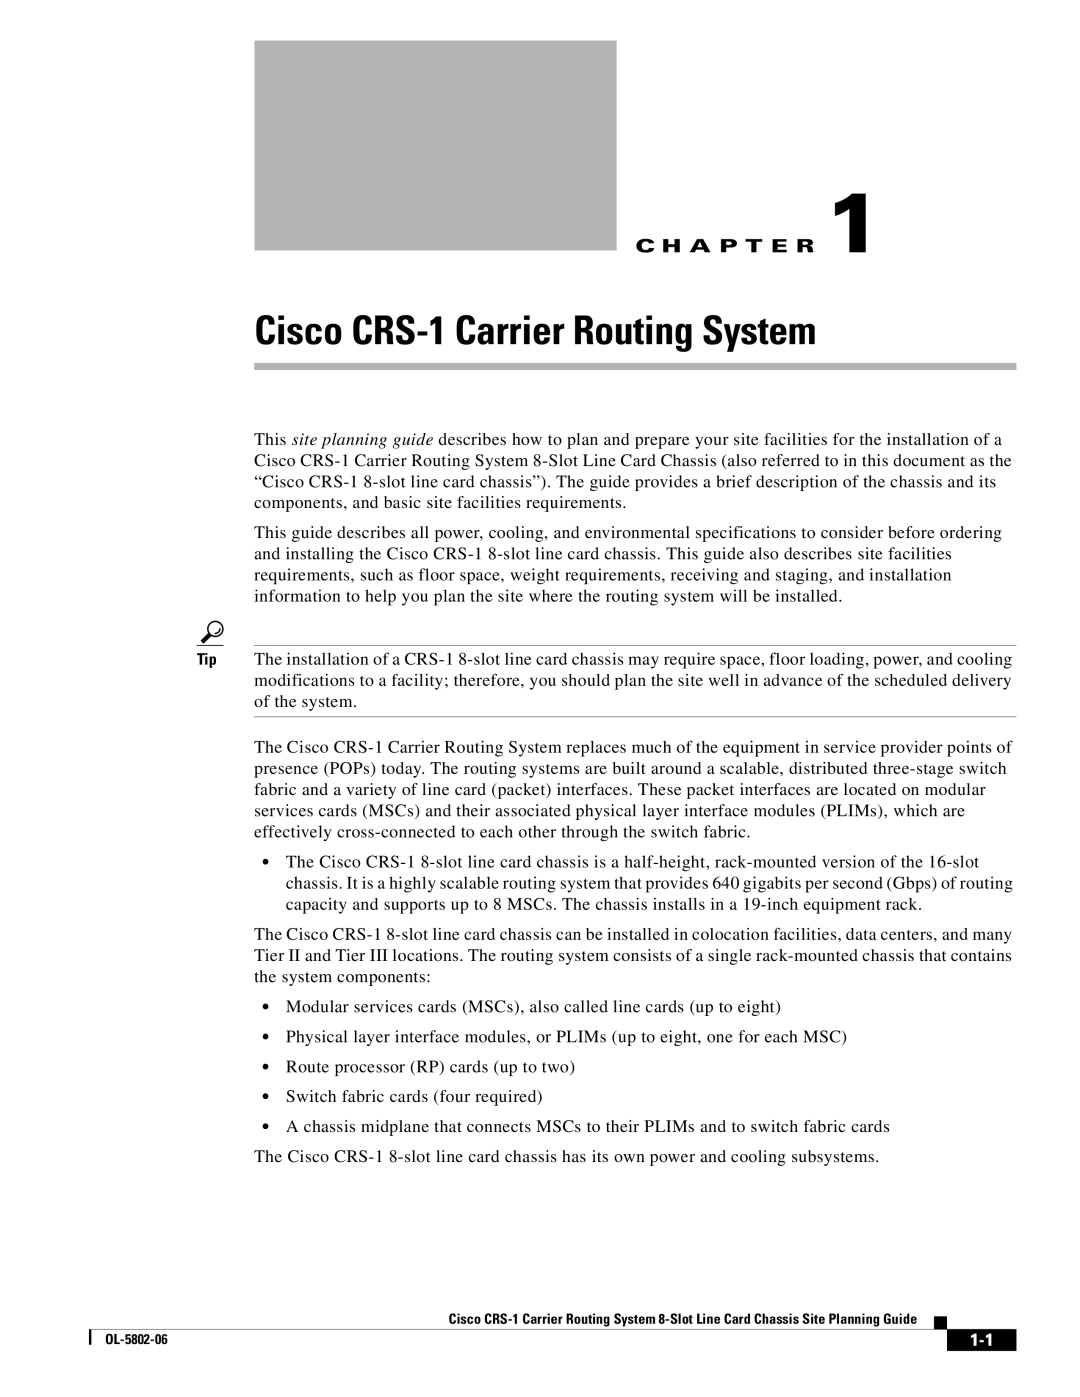 Cisco Systems CRS-1 manual Corporate Headquarters, June, Cisco Systems, Inc, West Tasman Drive San Jose, CA, Fax: 408 